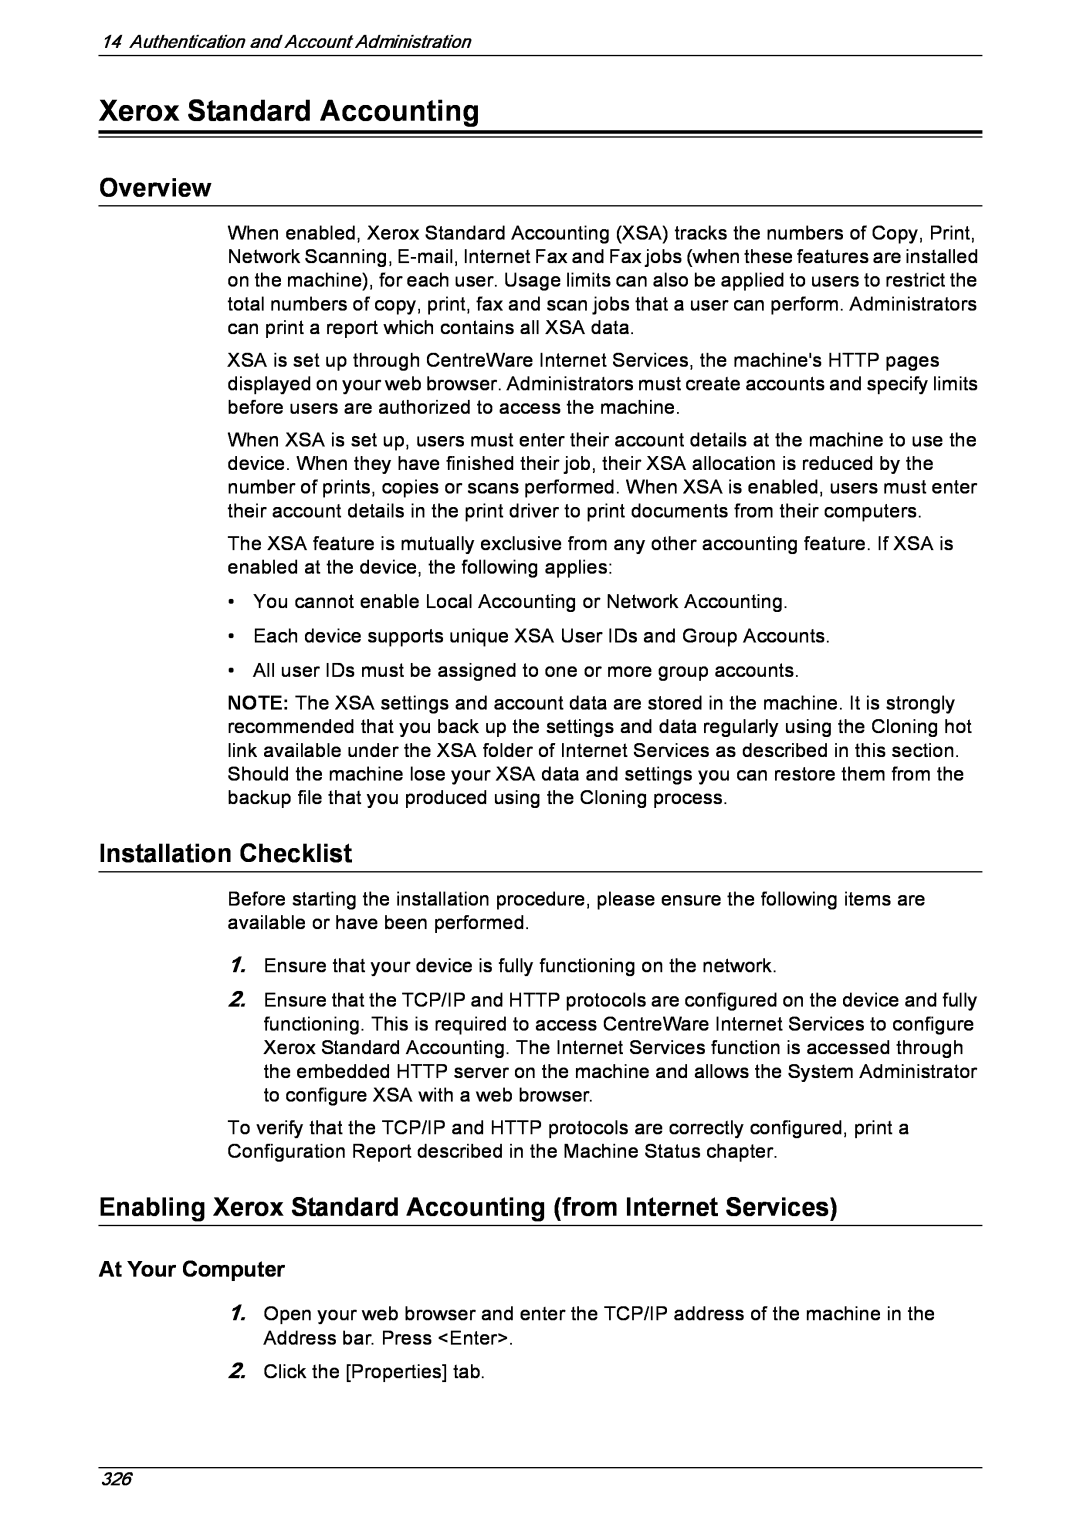 Xerox 5222 manual Xerox Standard Accounting, Overview, Installation Checklist 